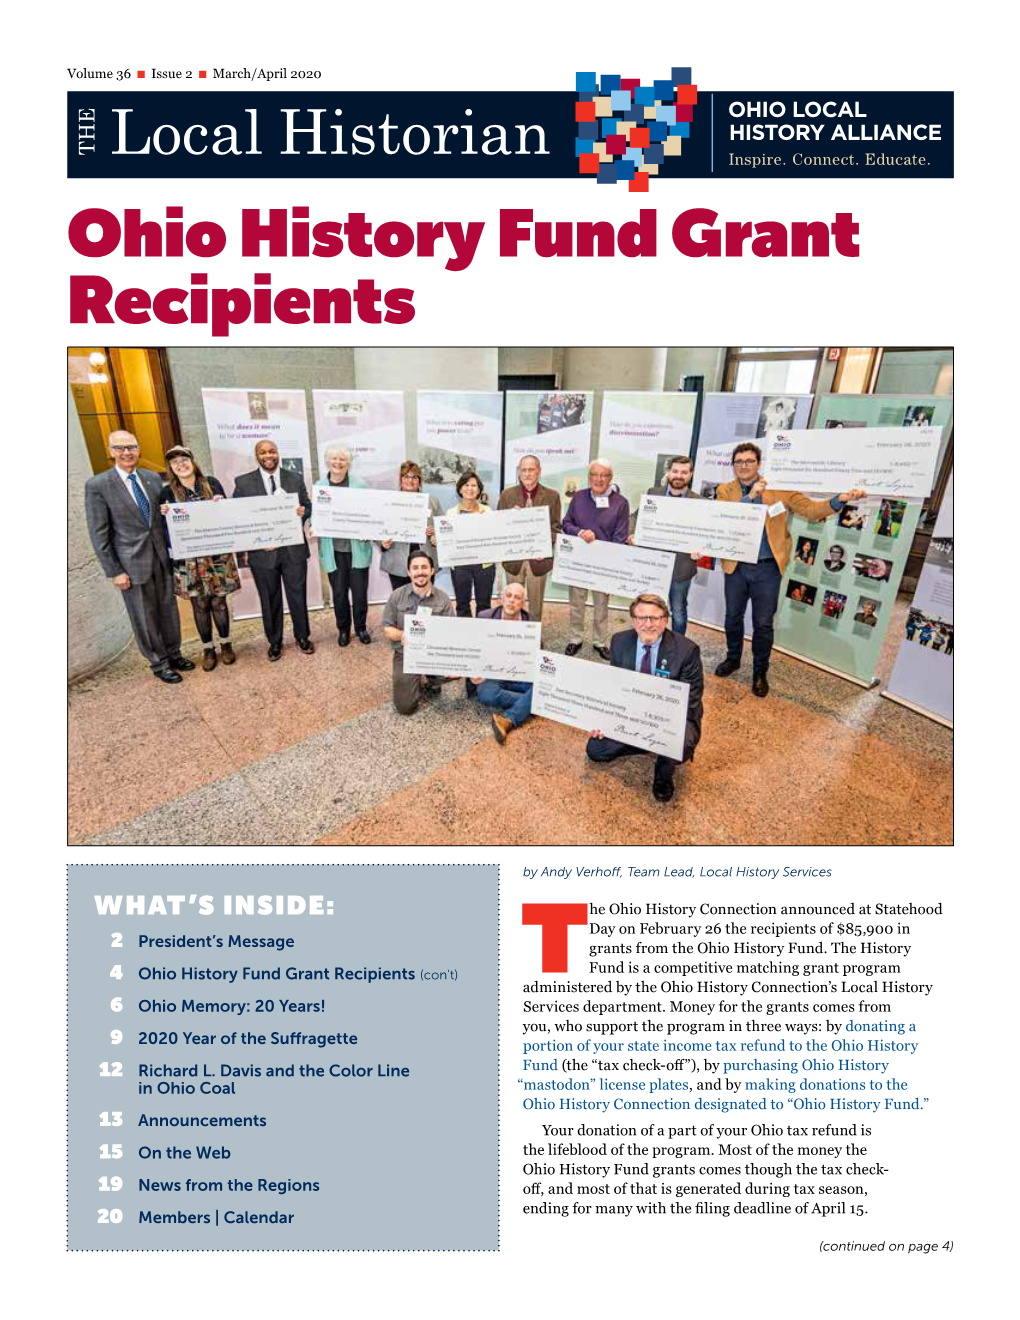 Ohio History Fund Grant Recipients